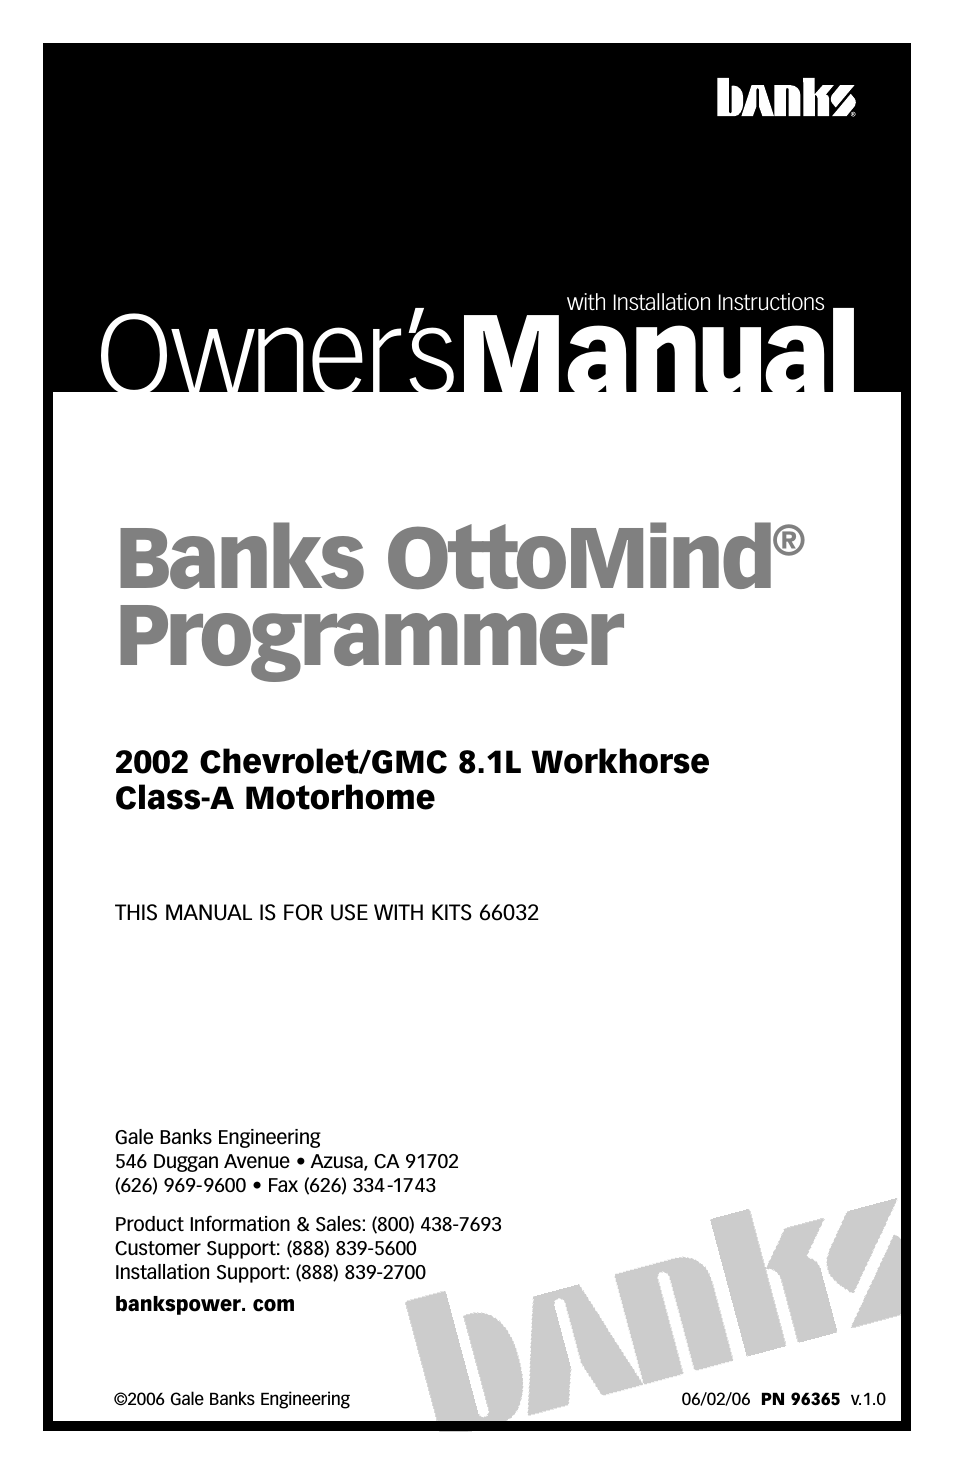 GM Motorhomes: (Gas ’01 - 10 8.1L Workhorse) Programmer- AutoMind programmer '02 Class-A MH